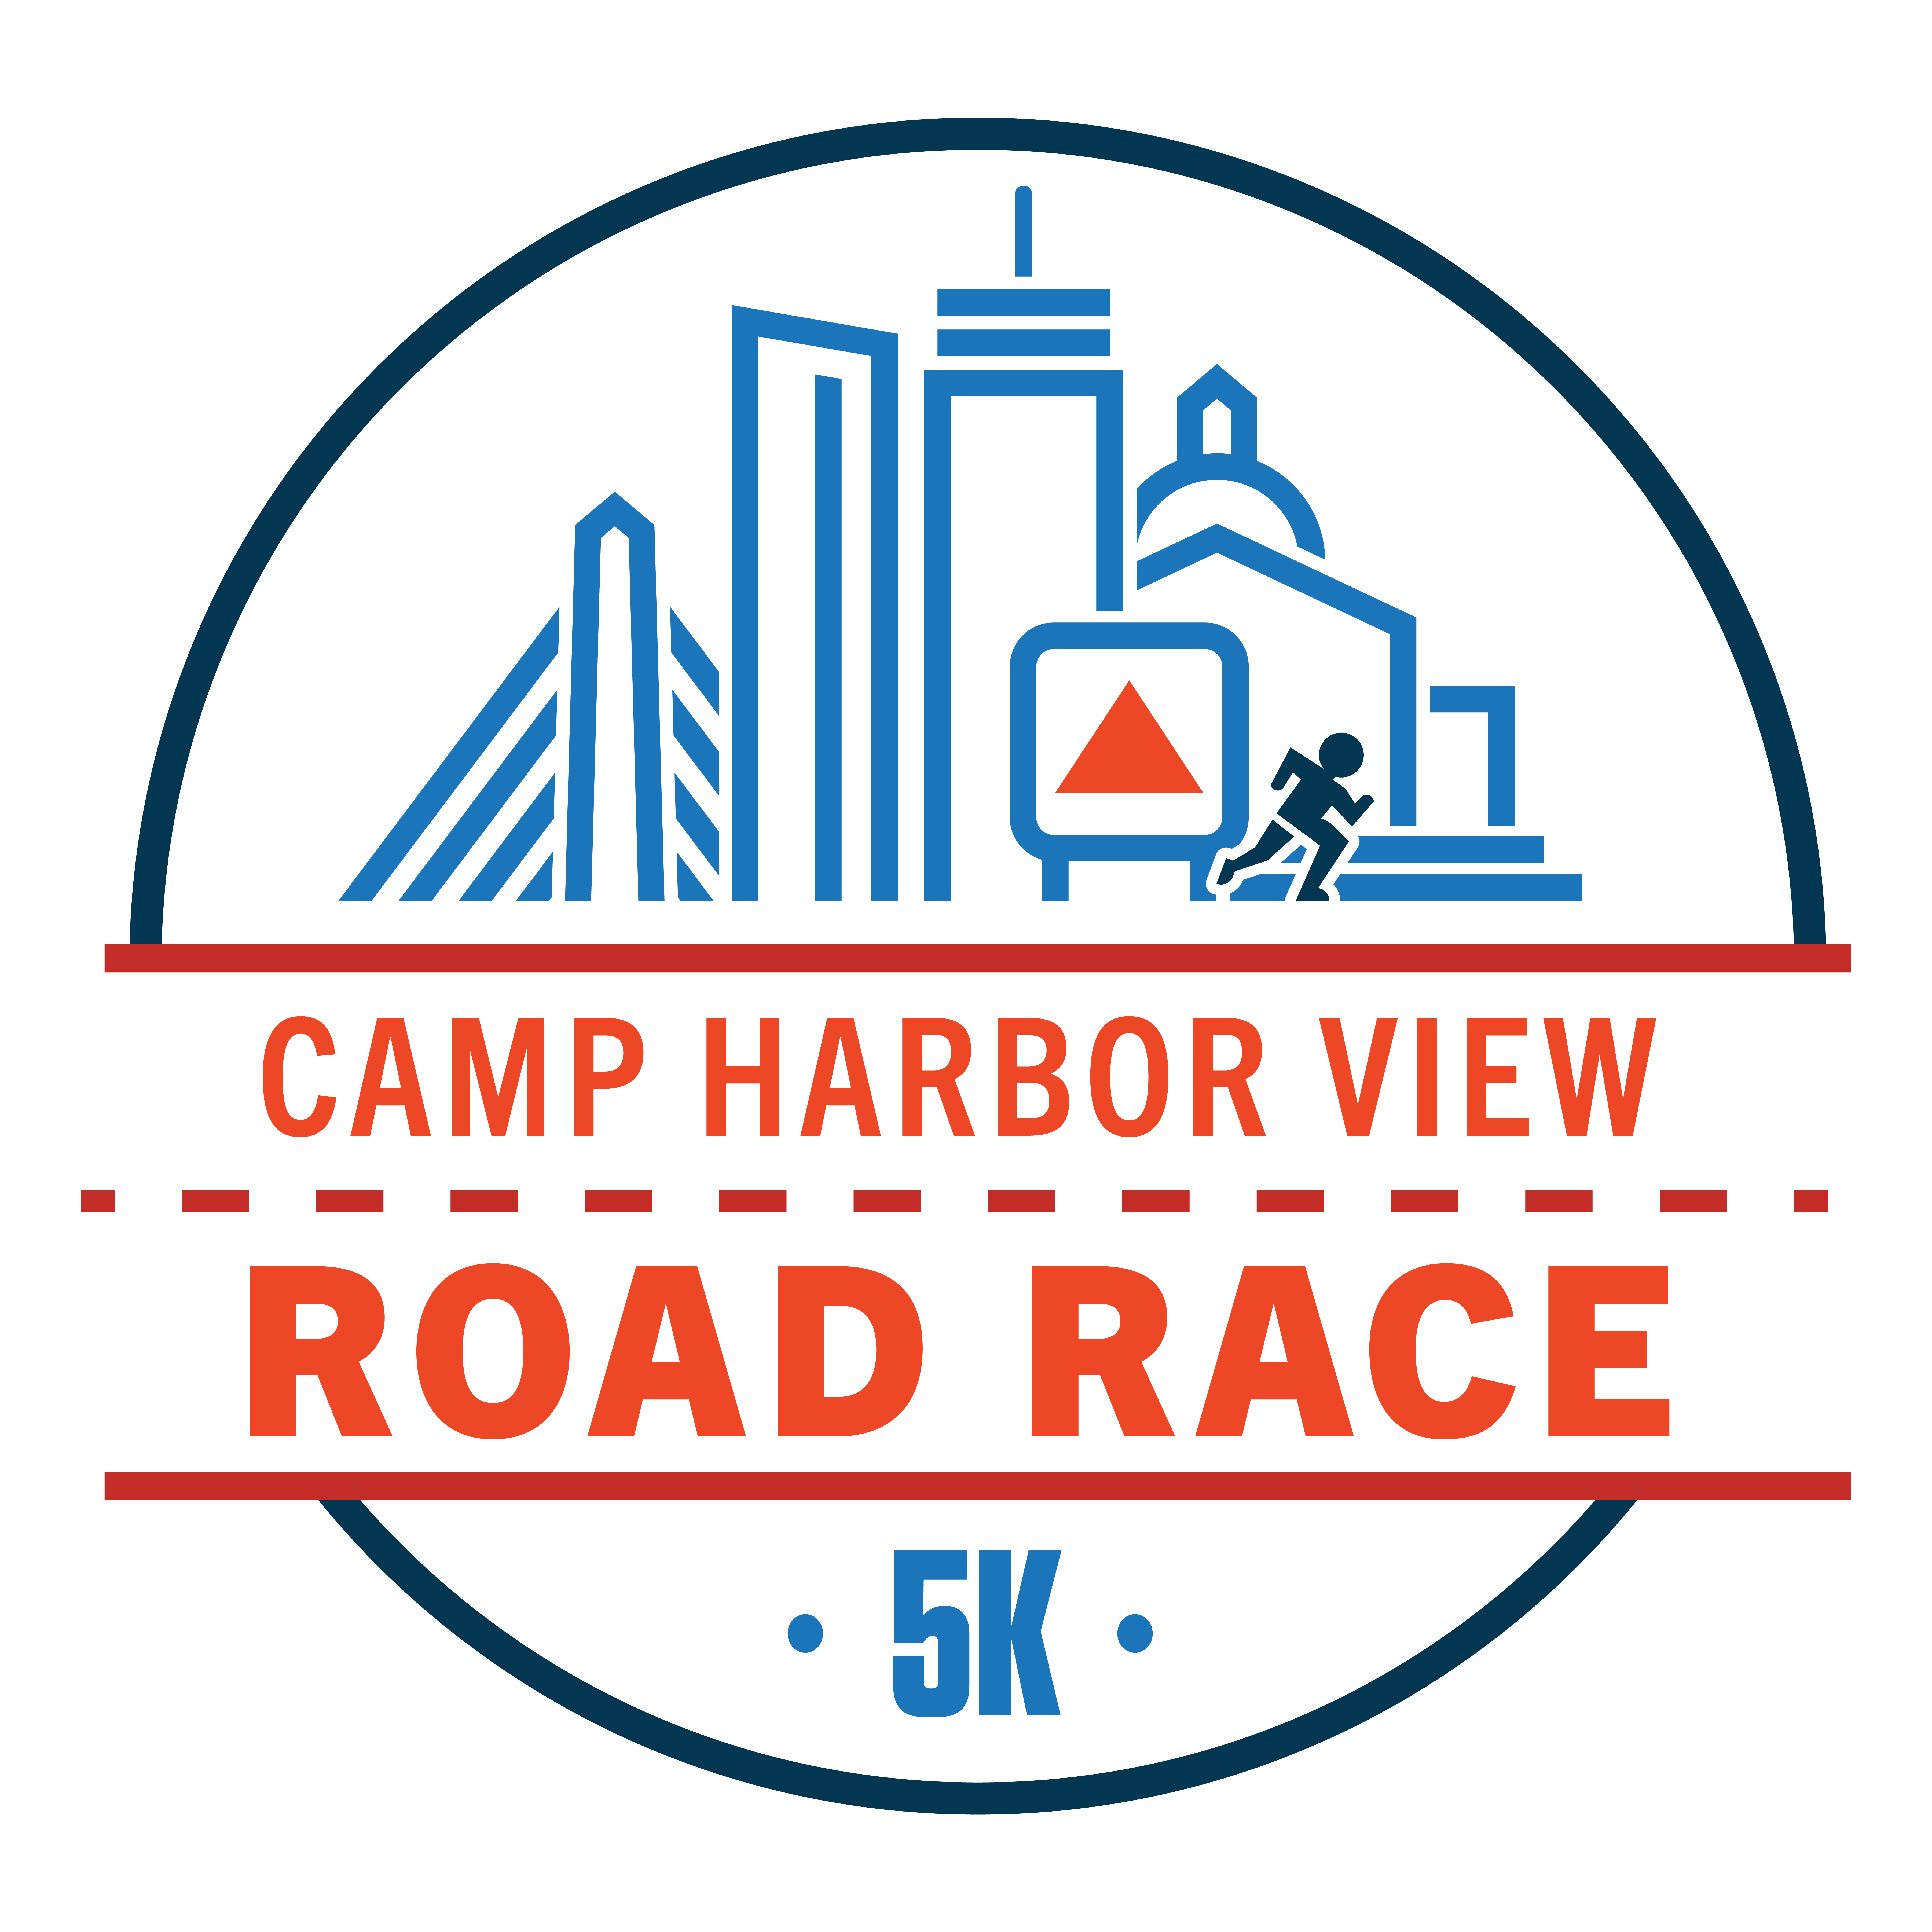 Camp Harbor View Road Race 5K logo on RaceRaves